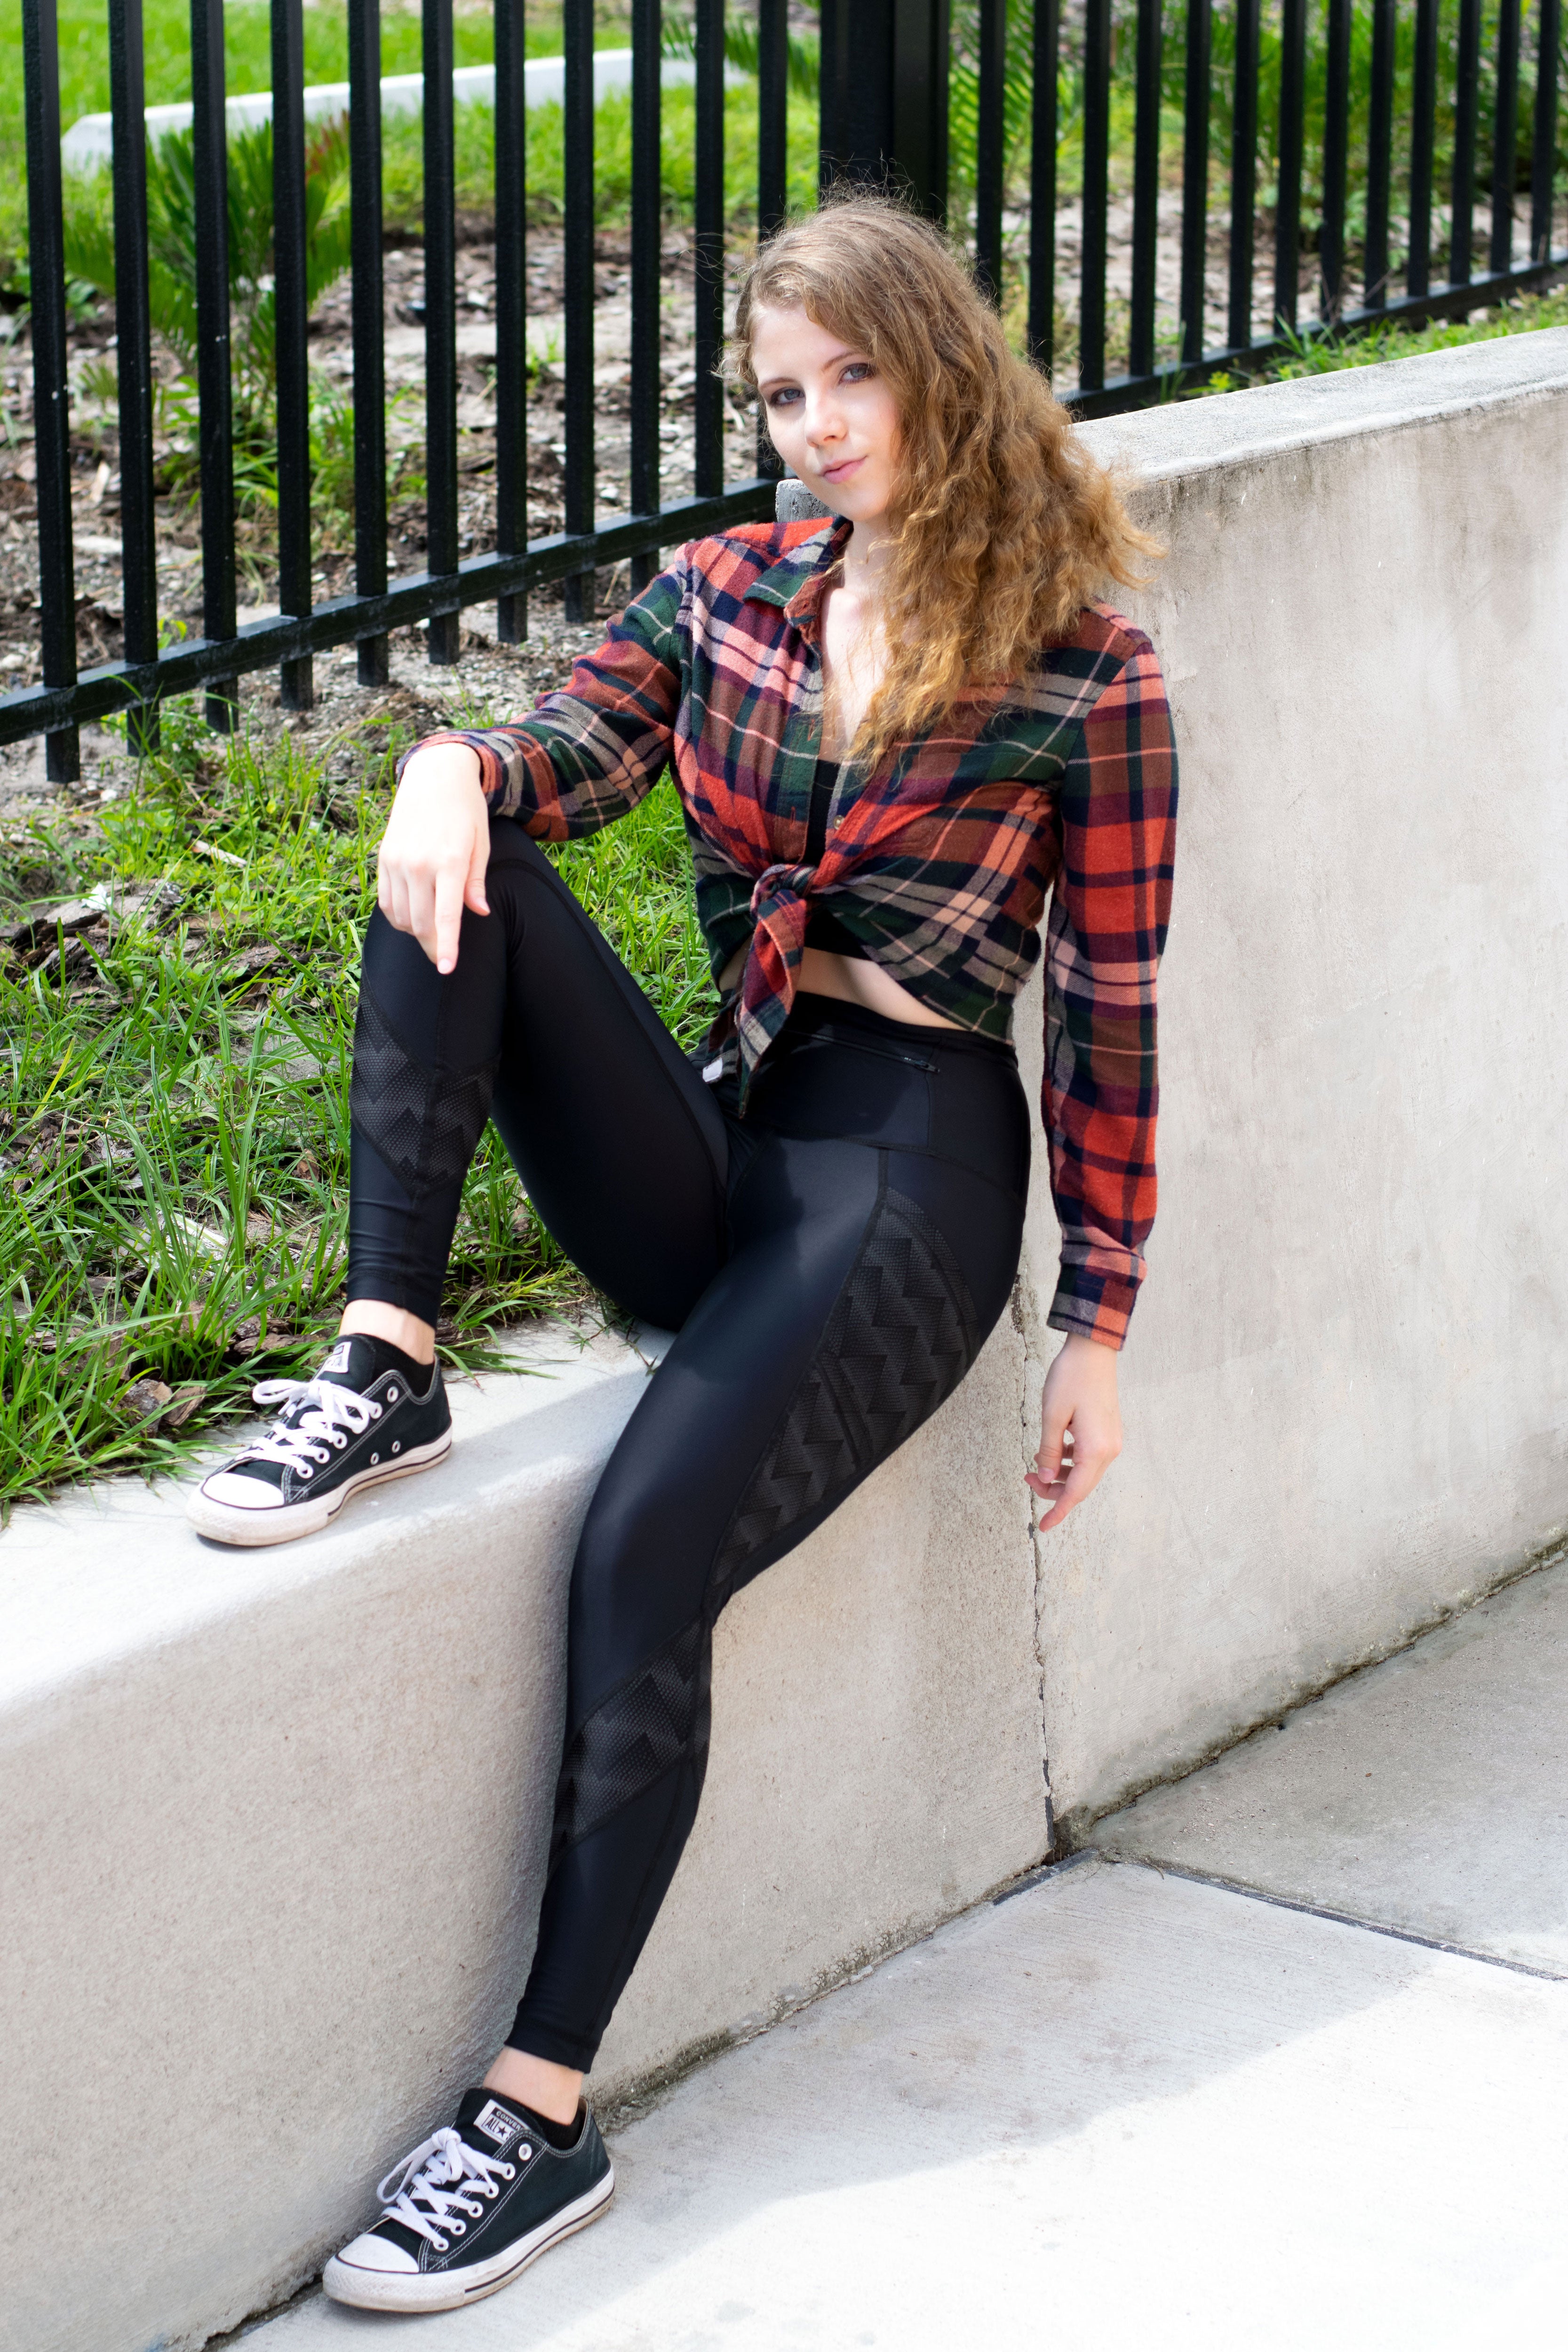 Model sitting on wall wearing Zag Reflective leggings